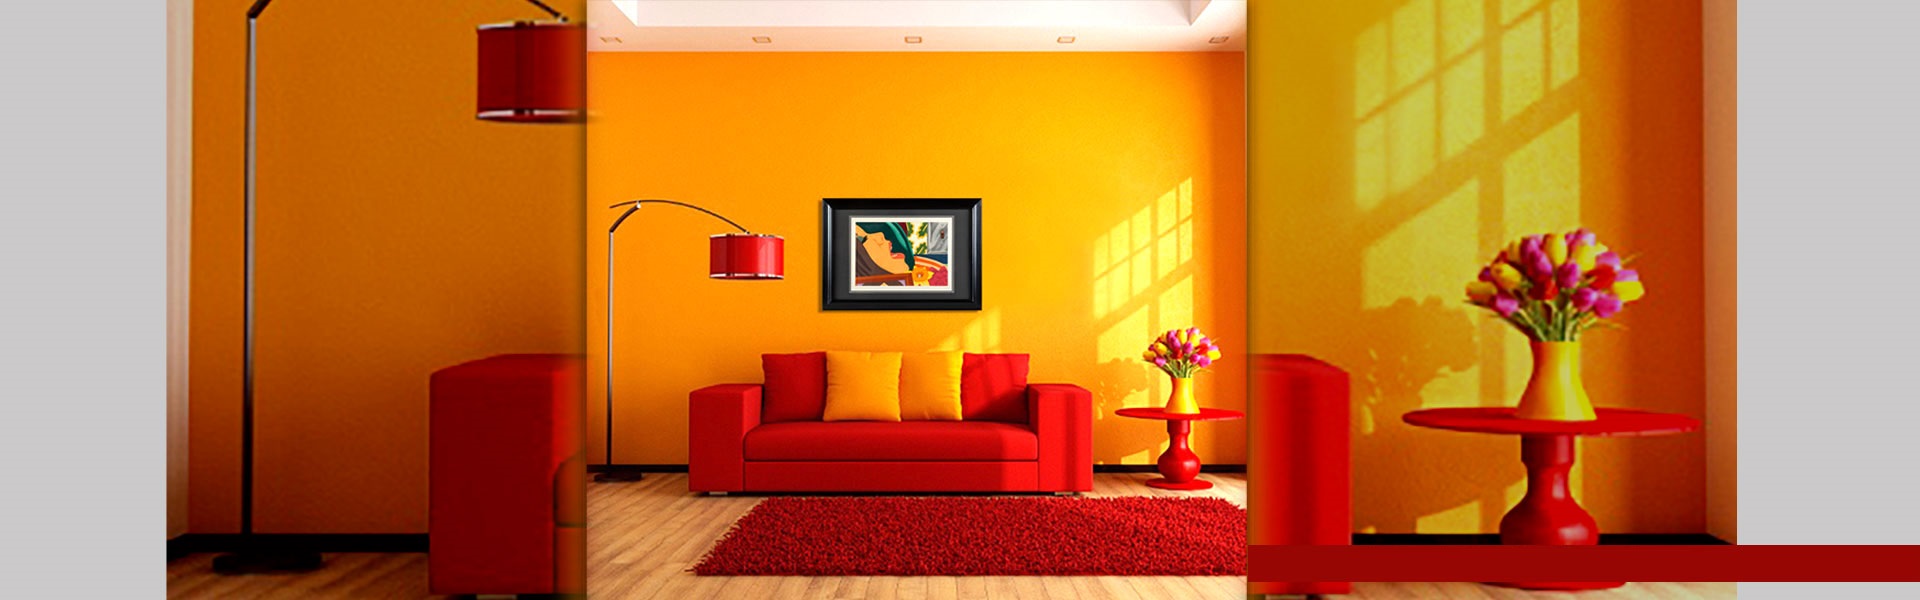 design 777a انتخاب رنگ مناسب برای خانه انتخاب رنگ مناسب خانه, ترکیب رنگ در دکوراسیون, رنگ تاکید, رنگ سایه, رنگ‌آمیزی خانه